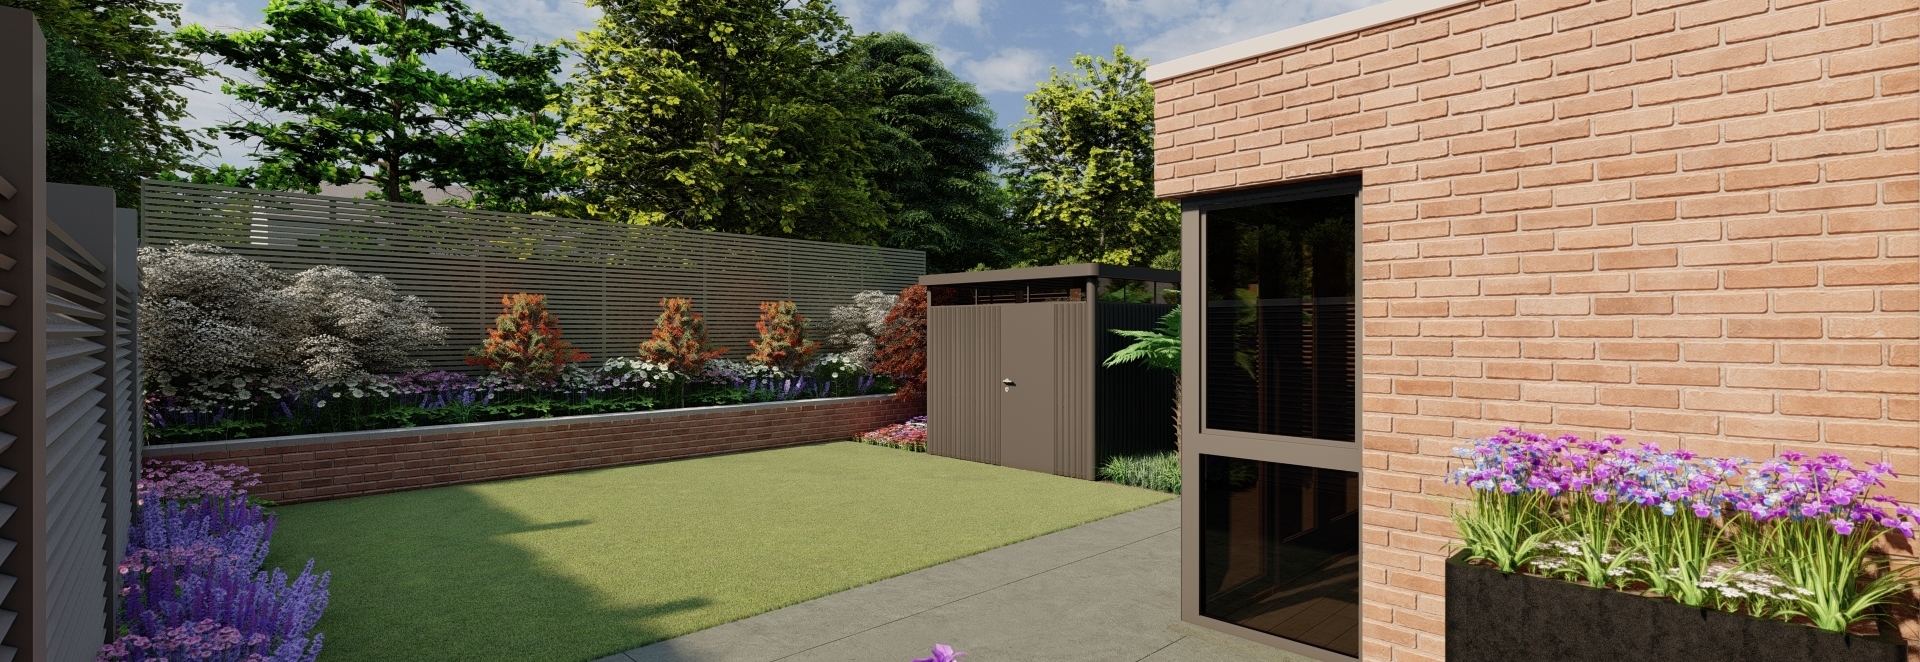 Garden Design Blackrock | 3D Design Visuals for Family Garden in Blackrock Co Dublin